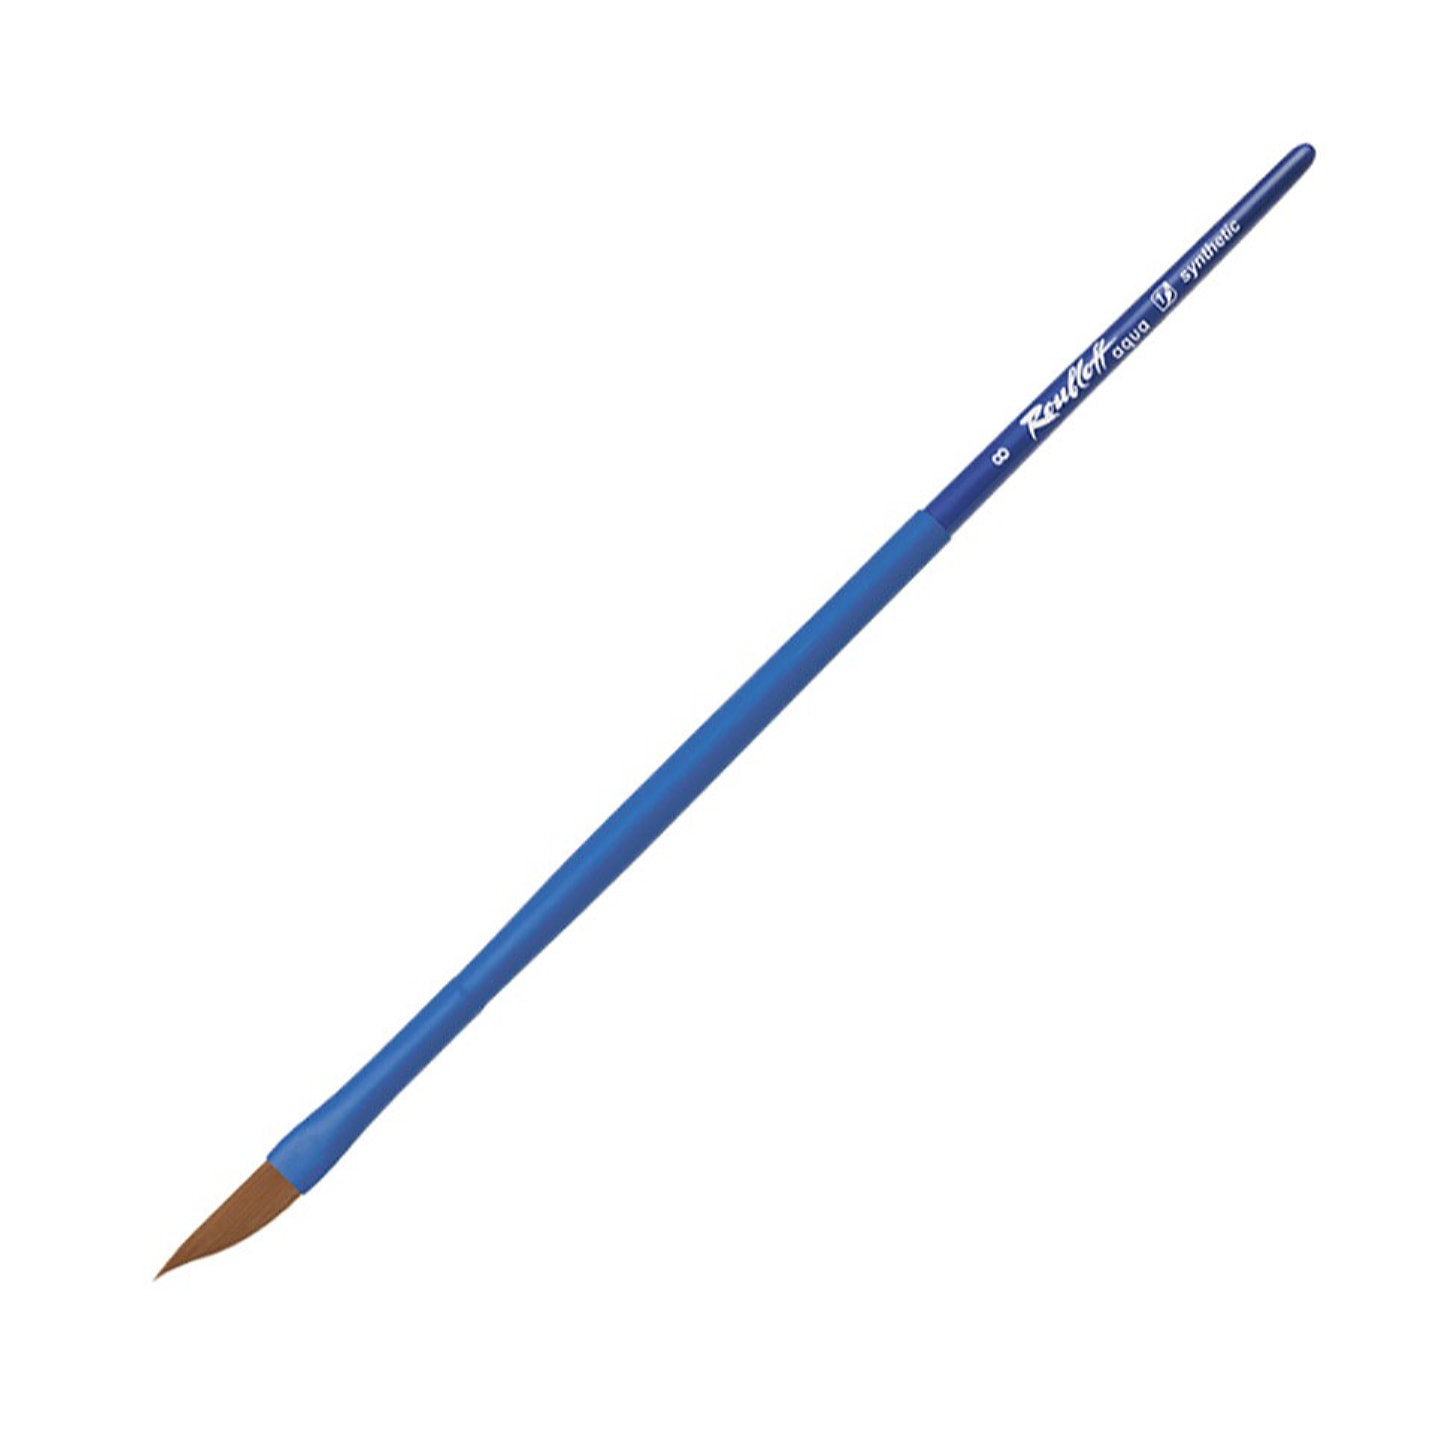 Кисть Roubloff Aqua Blue round синтетика коричн. даггер обойма soft-touch ручка длинная синяя №8 5 шт/упак